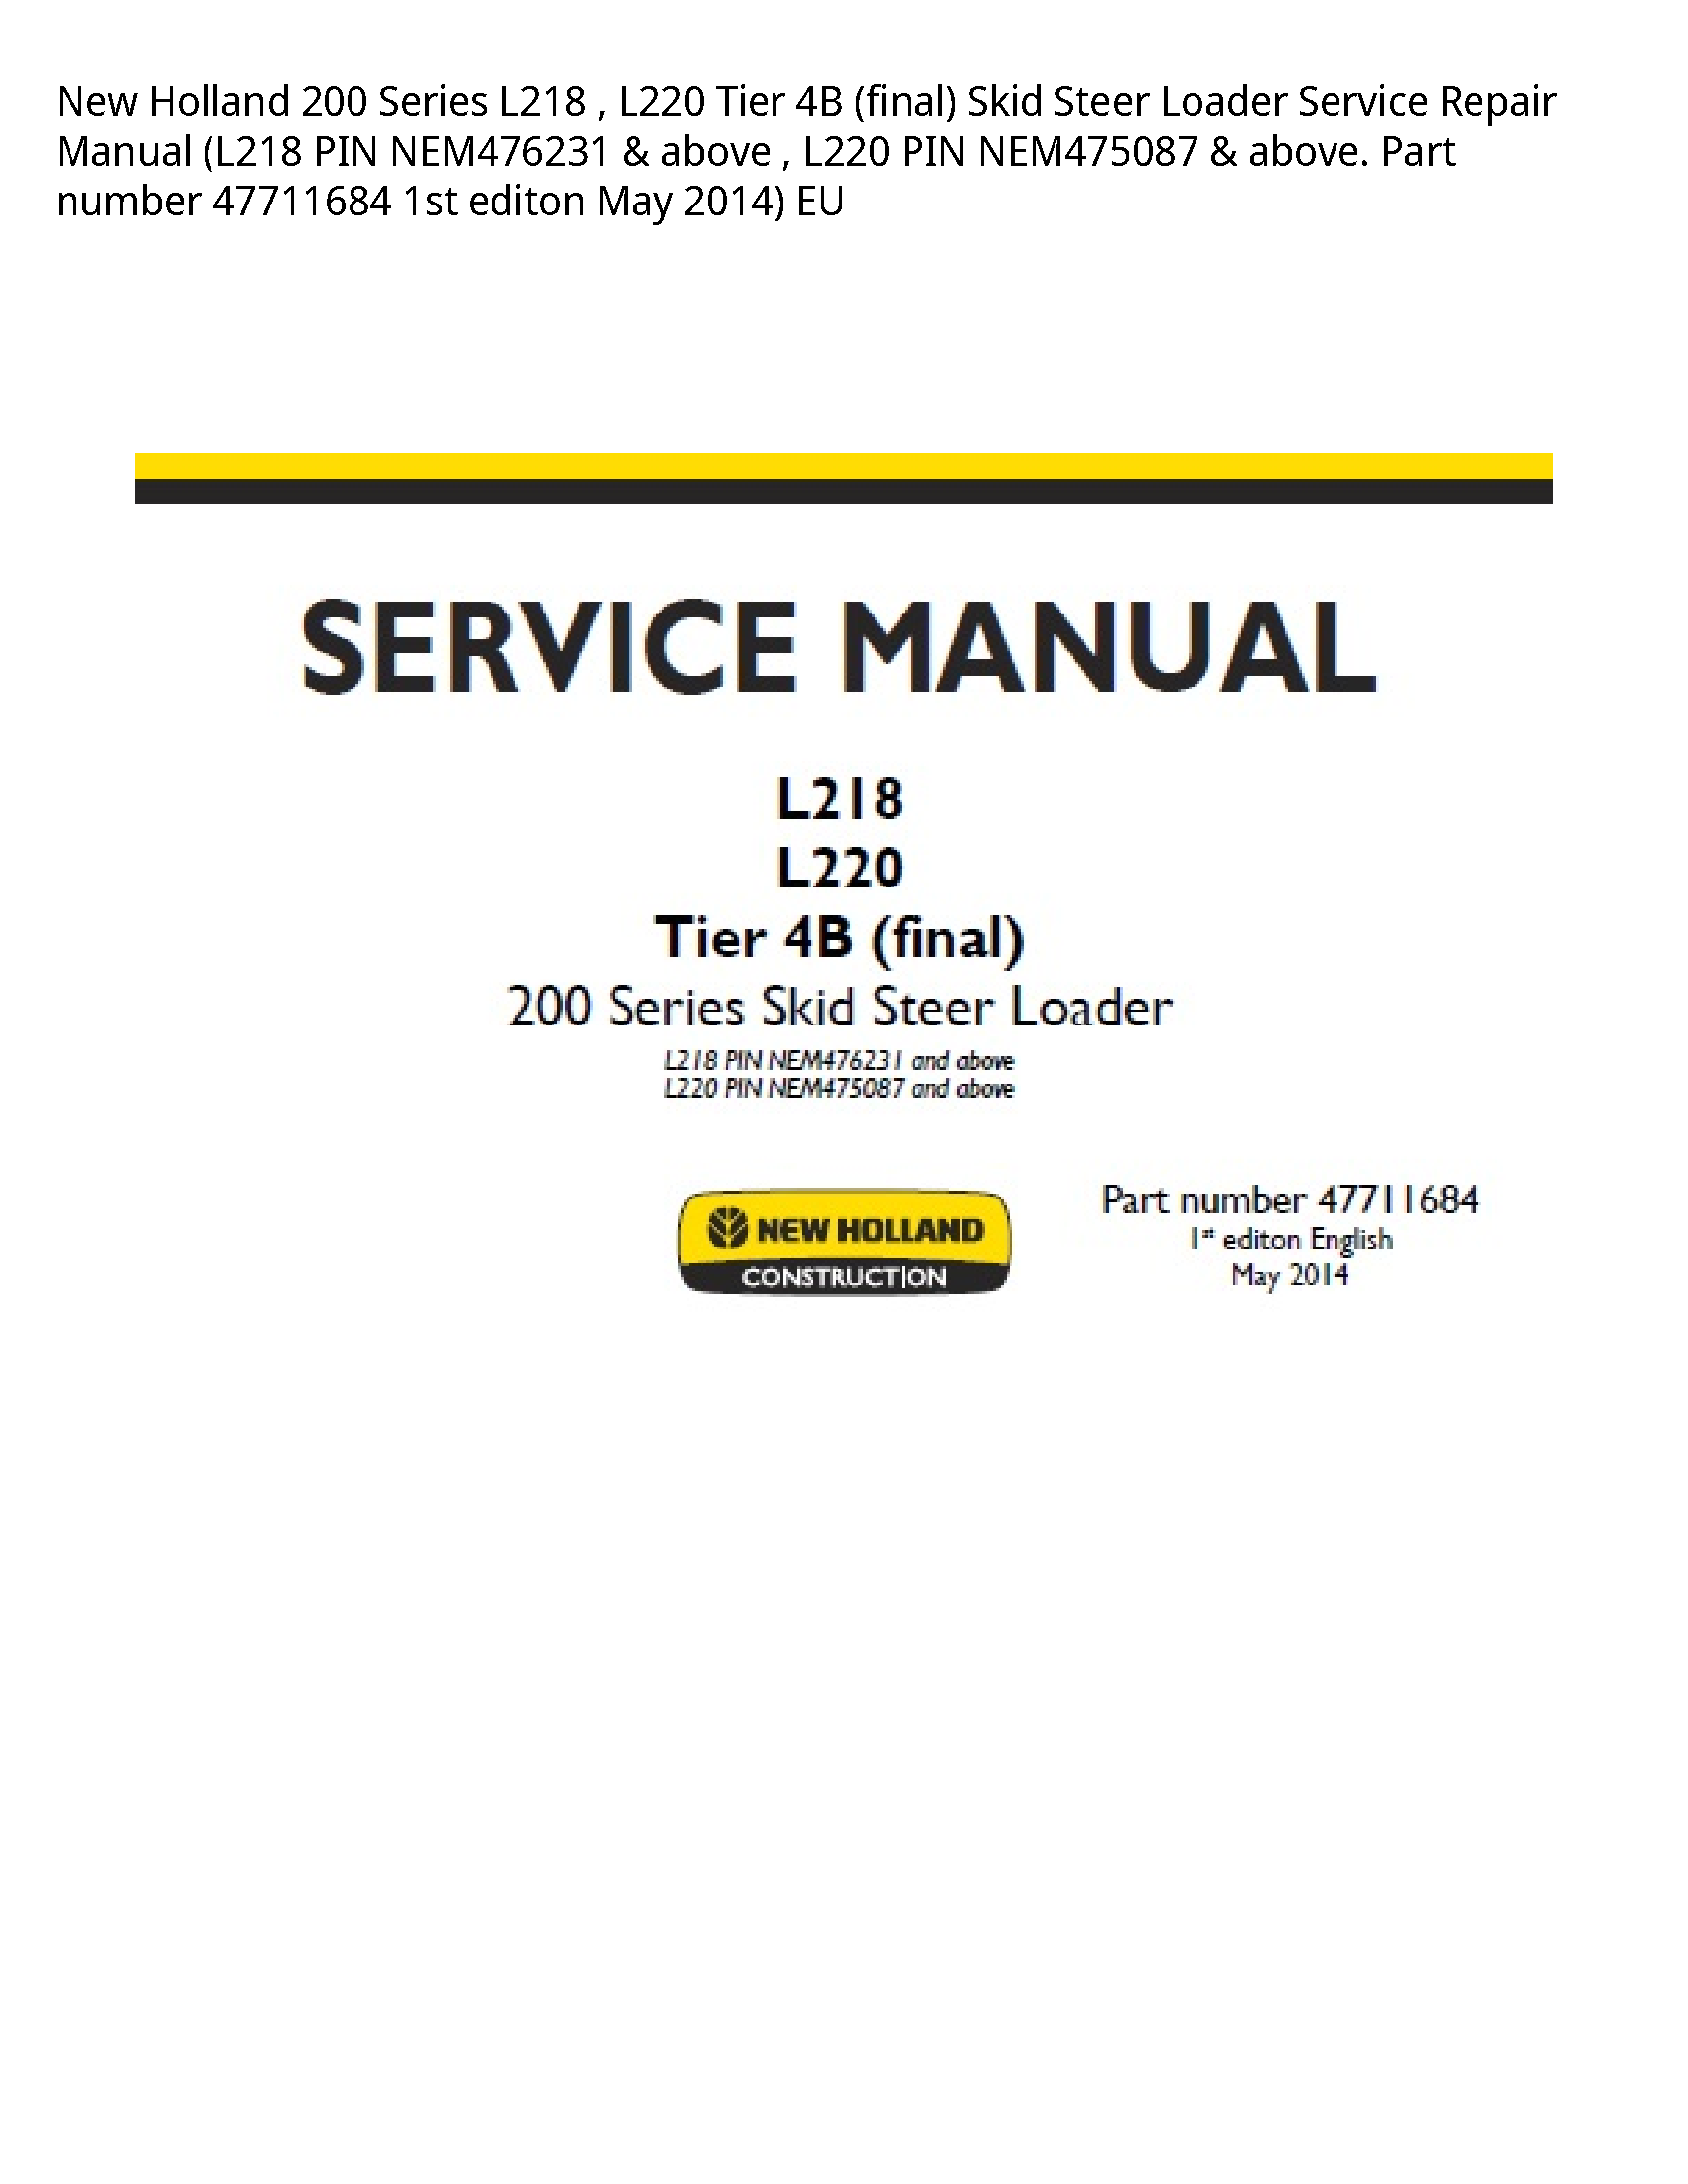 New Holland 200 Series Tier (final) Skid Steer Loader manual